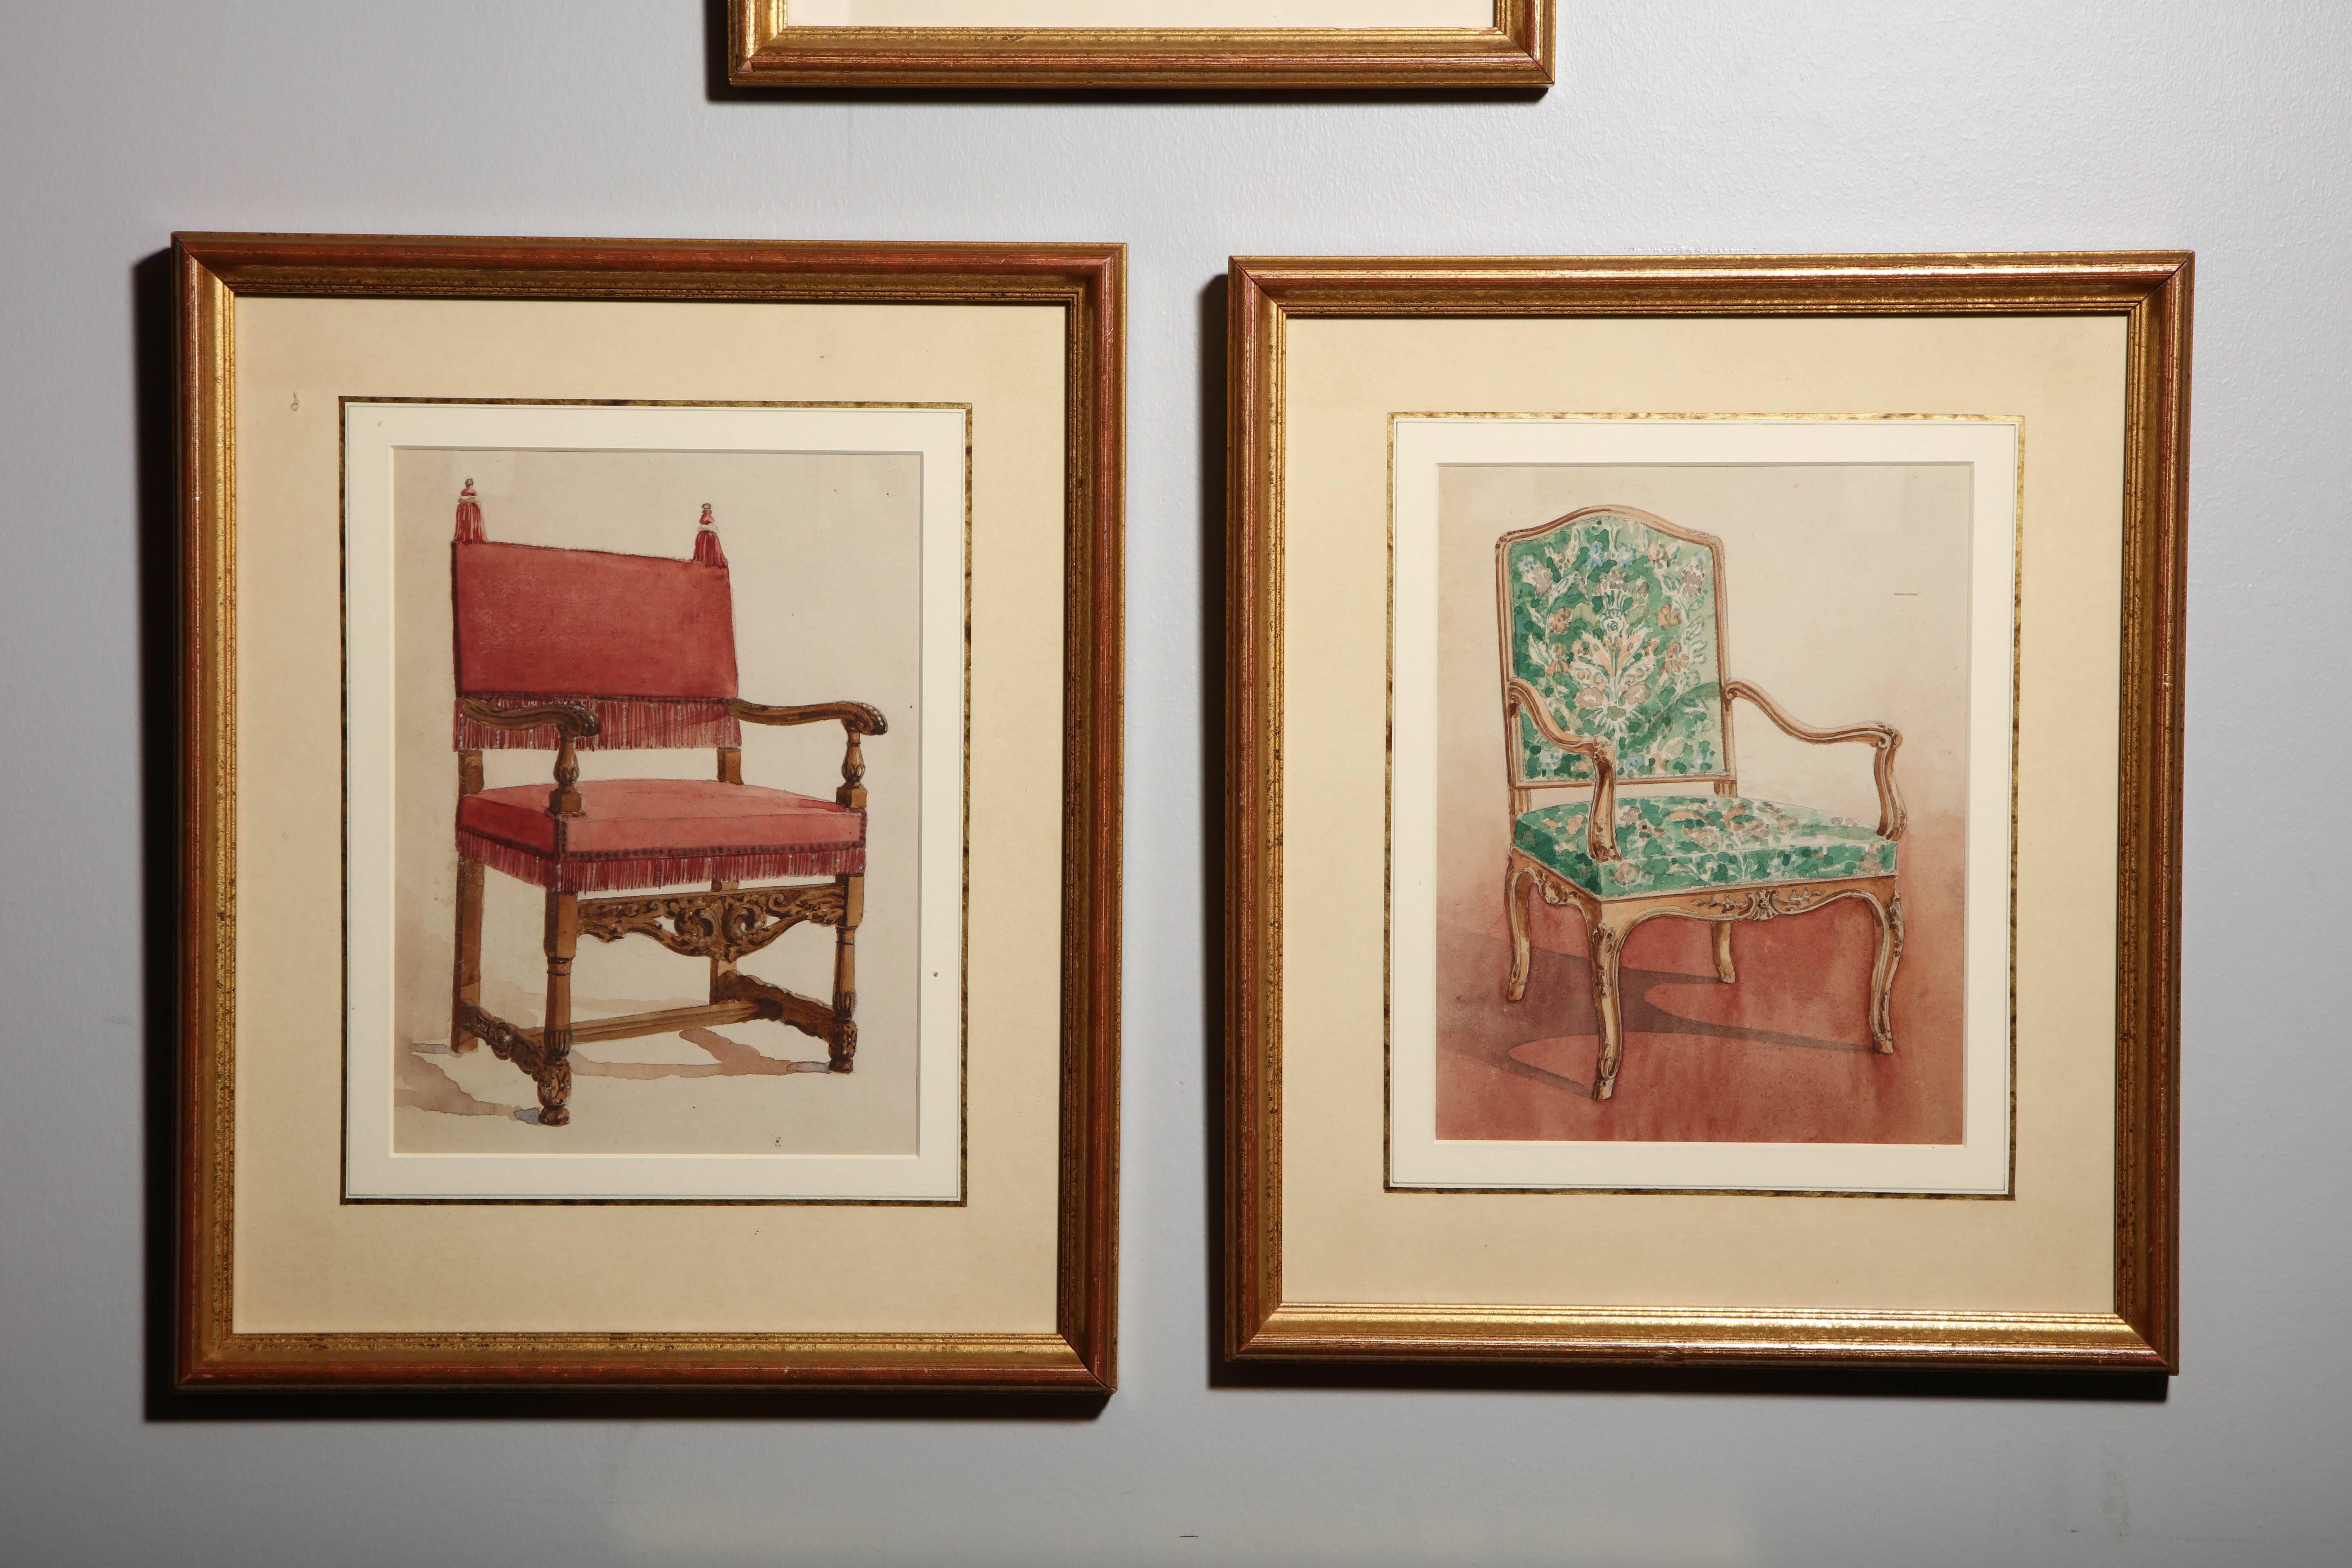 European Series of Hand-Painted Drawings of Furniture